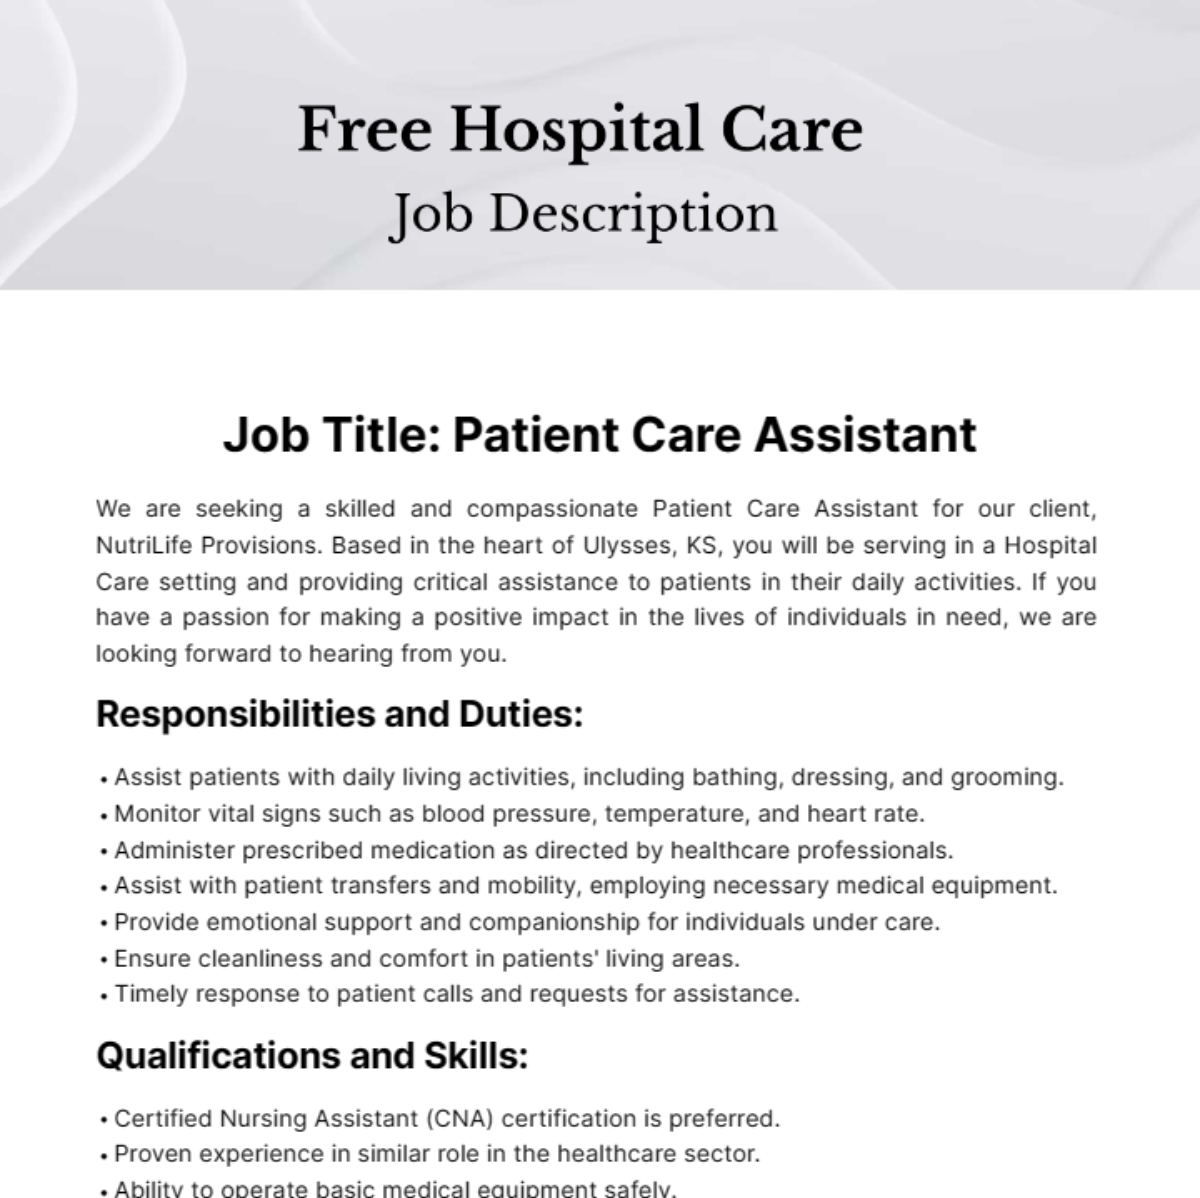 Free Hospital Care Job Description Template